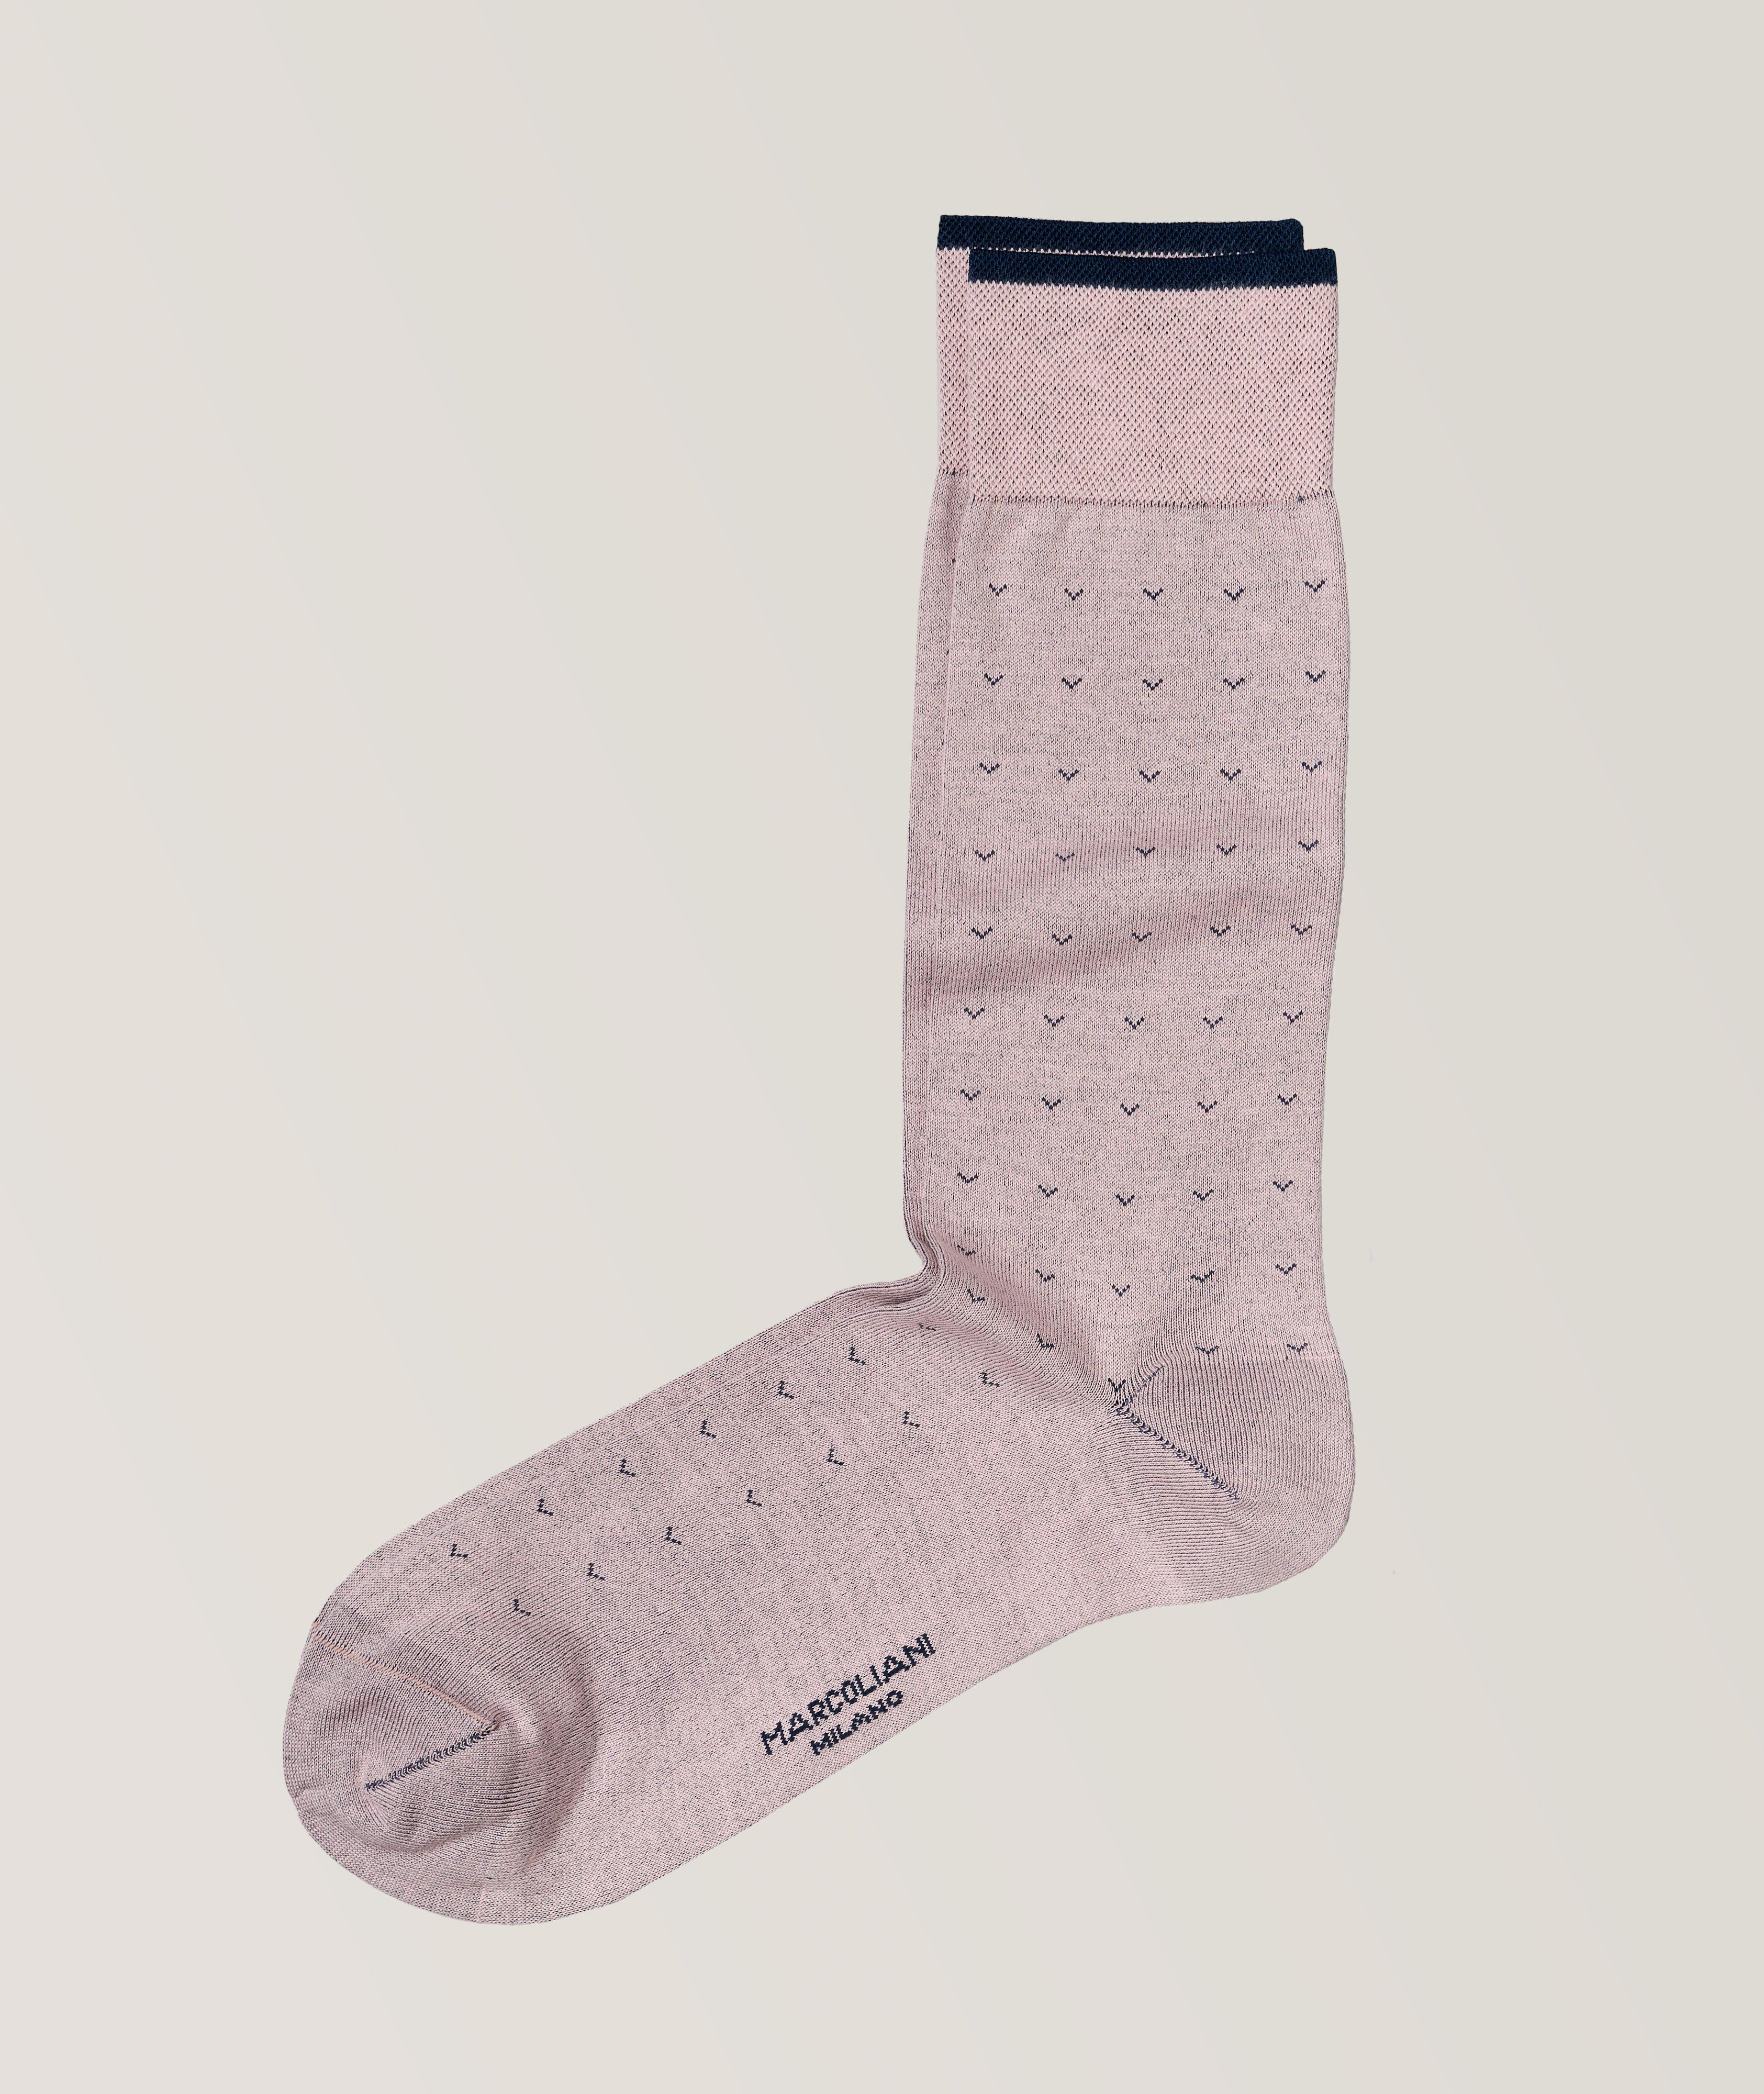 Volo Print Cotton-Blend Crew Socks image 0